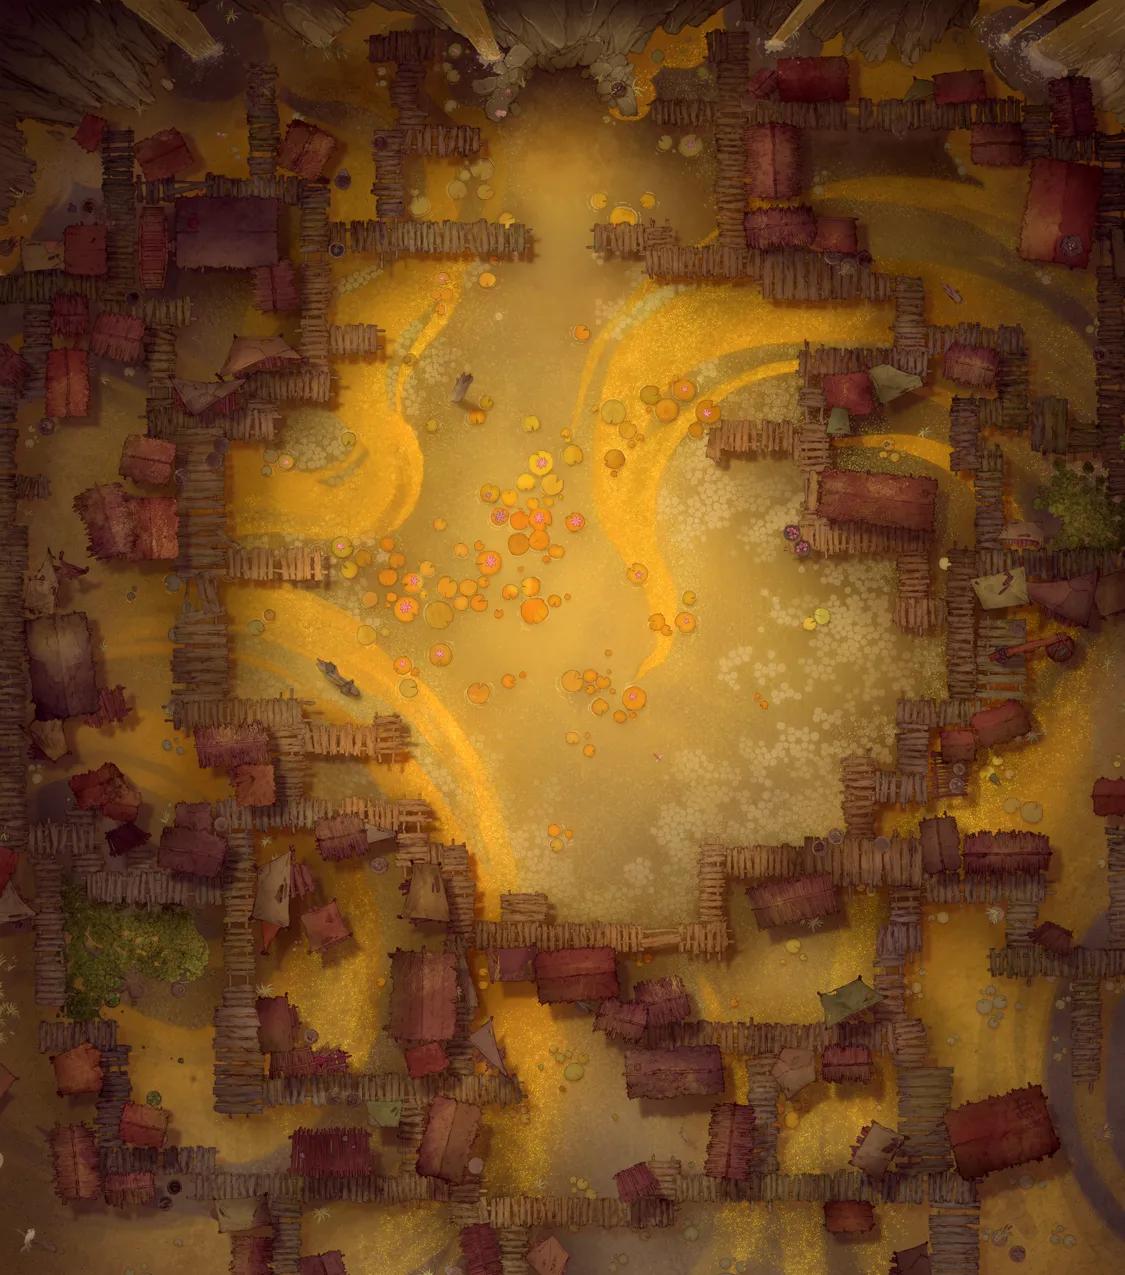 Bullywug Swamp map, Autumn Day variant